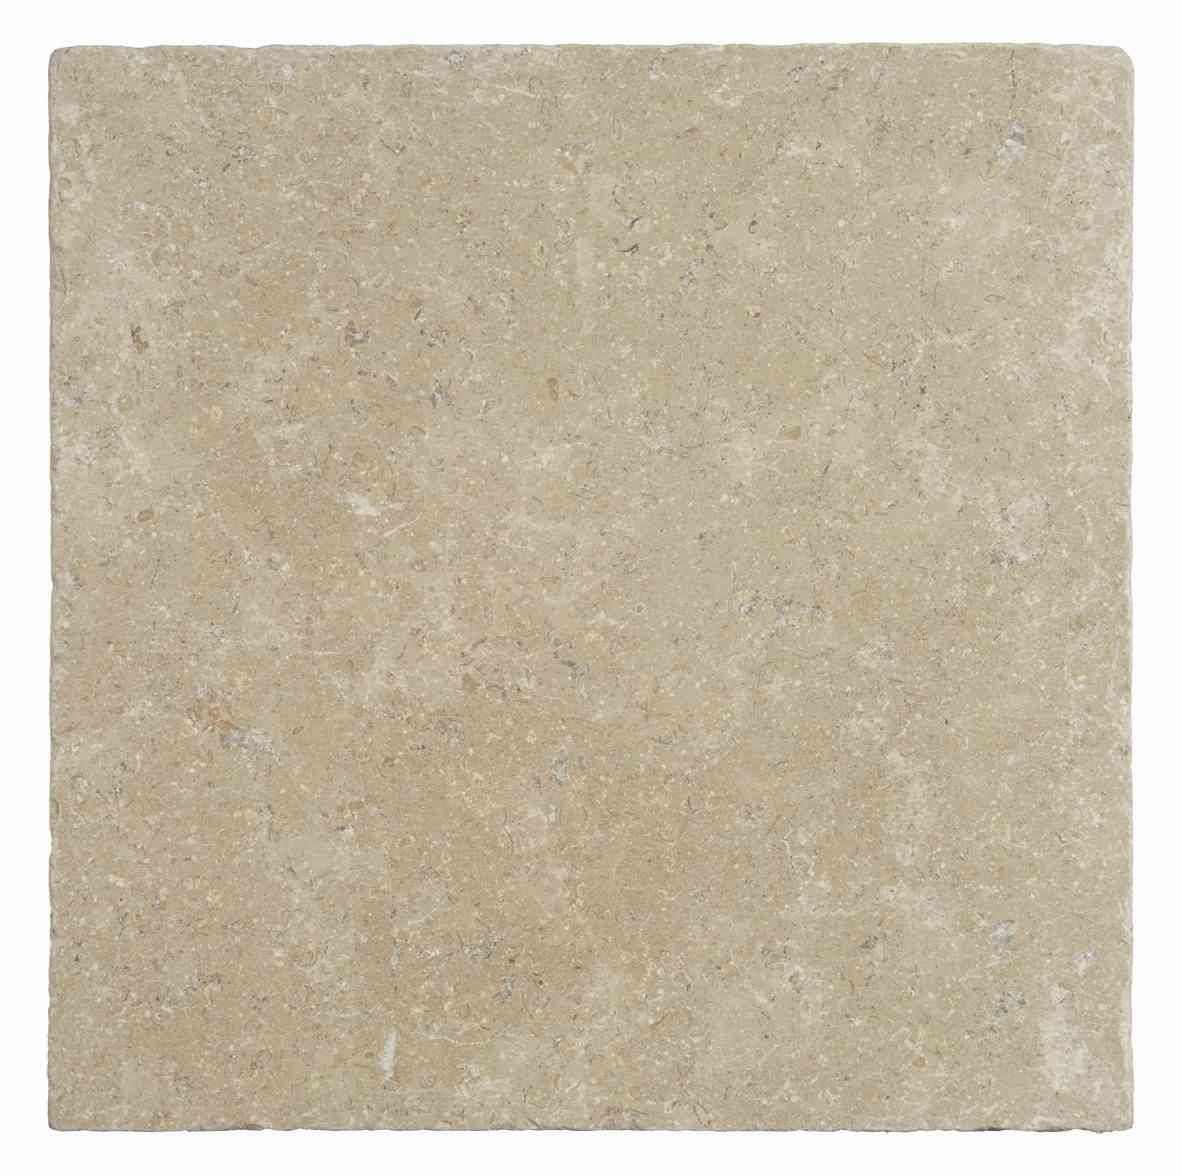 Original Style Earthworks St Sernin Tumbled Limestone Tile 40x40cm